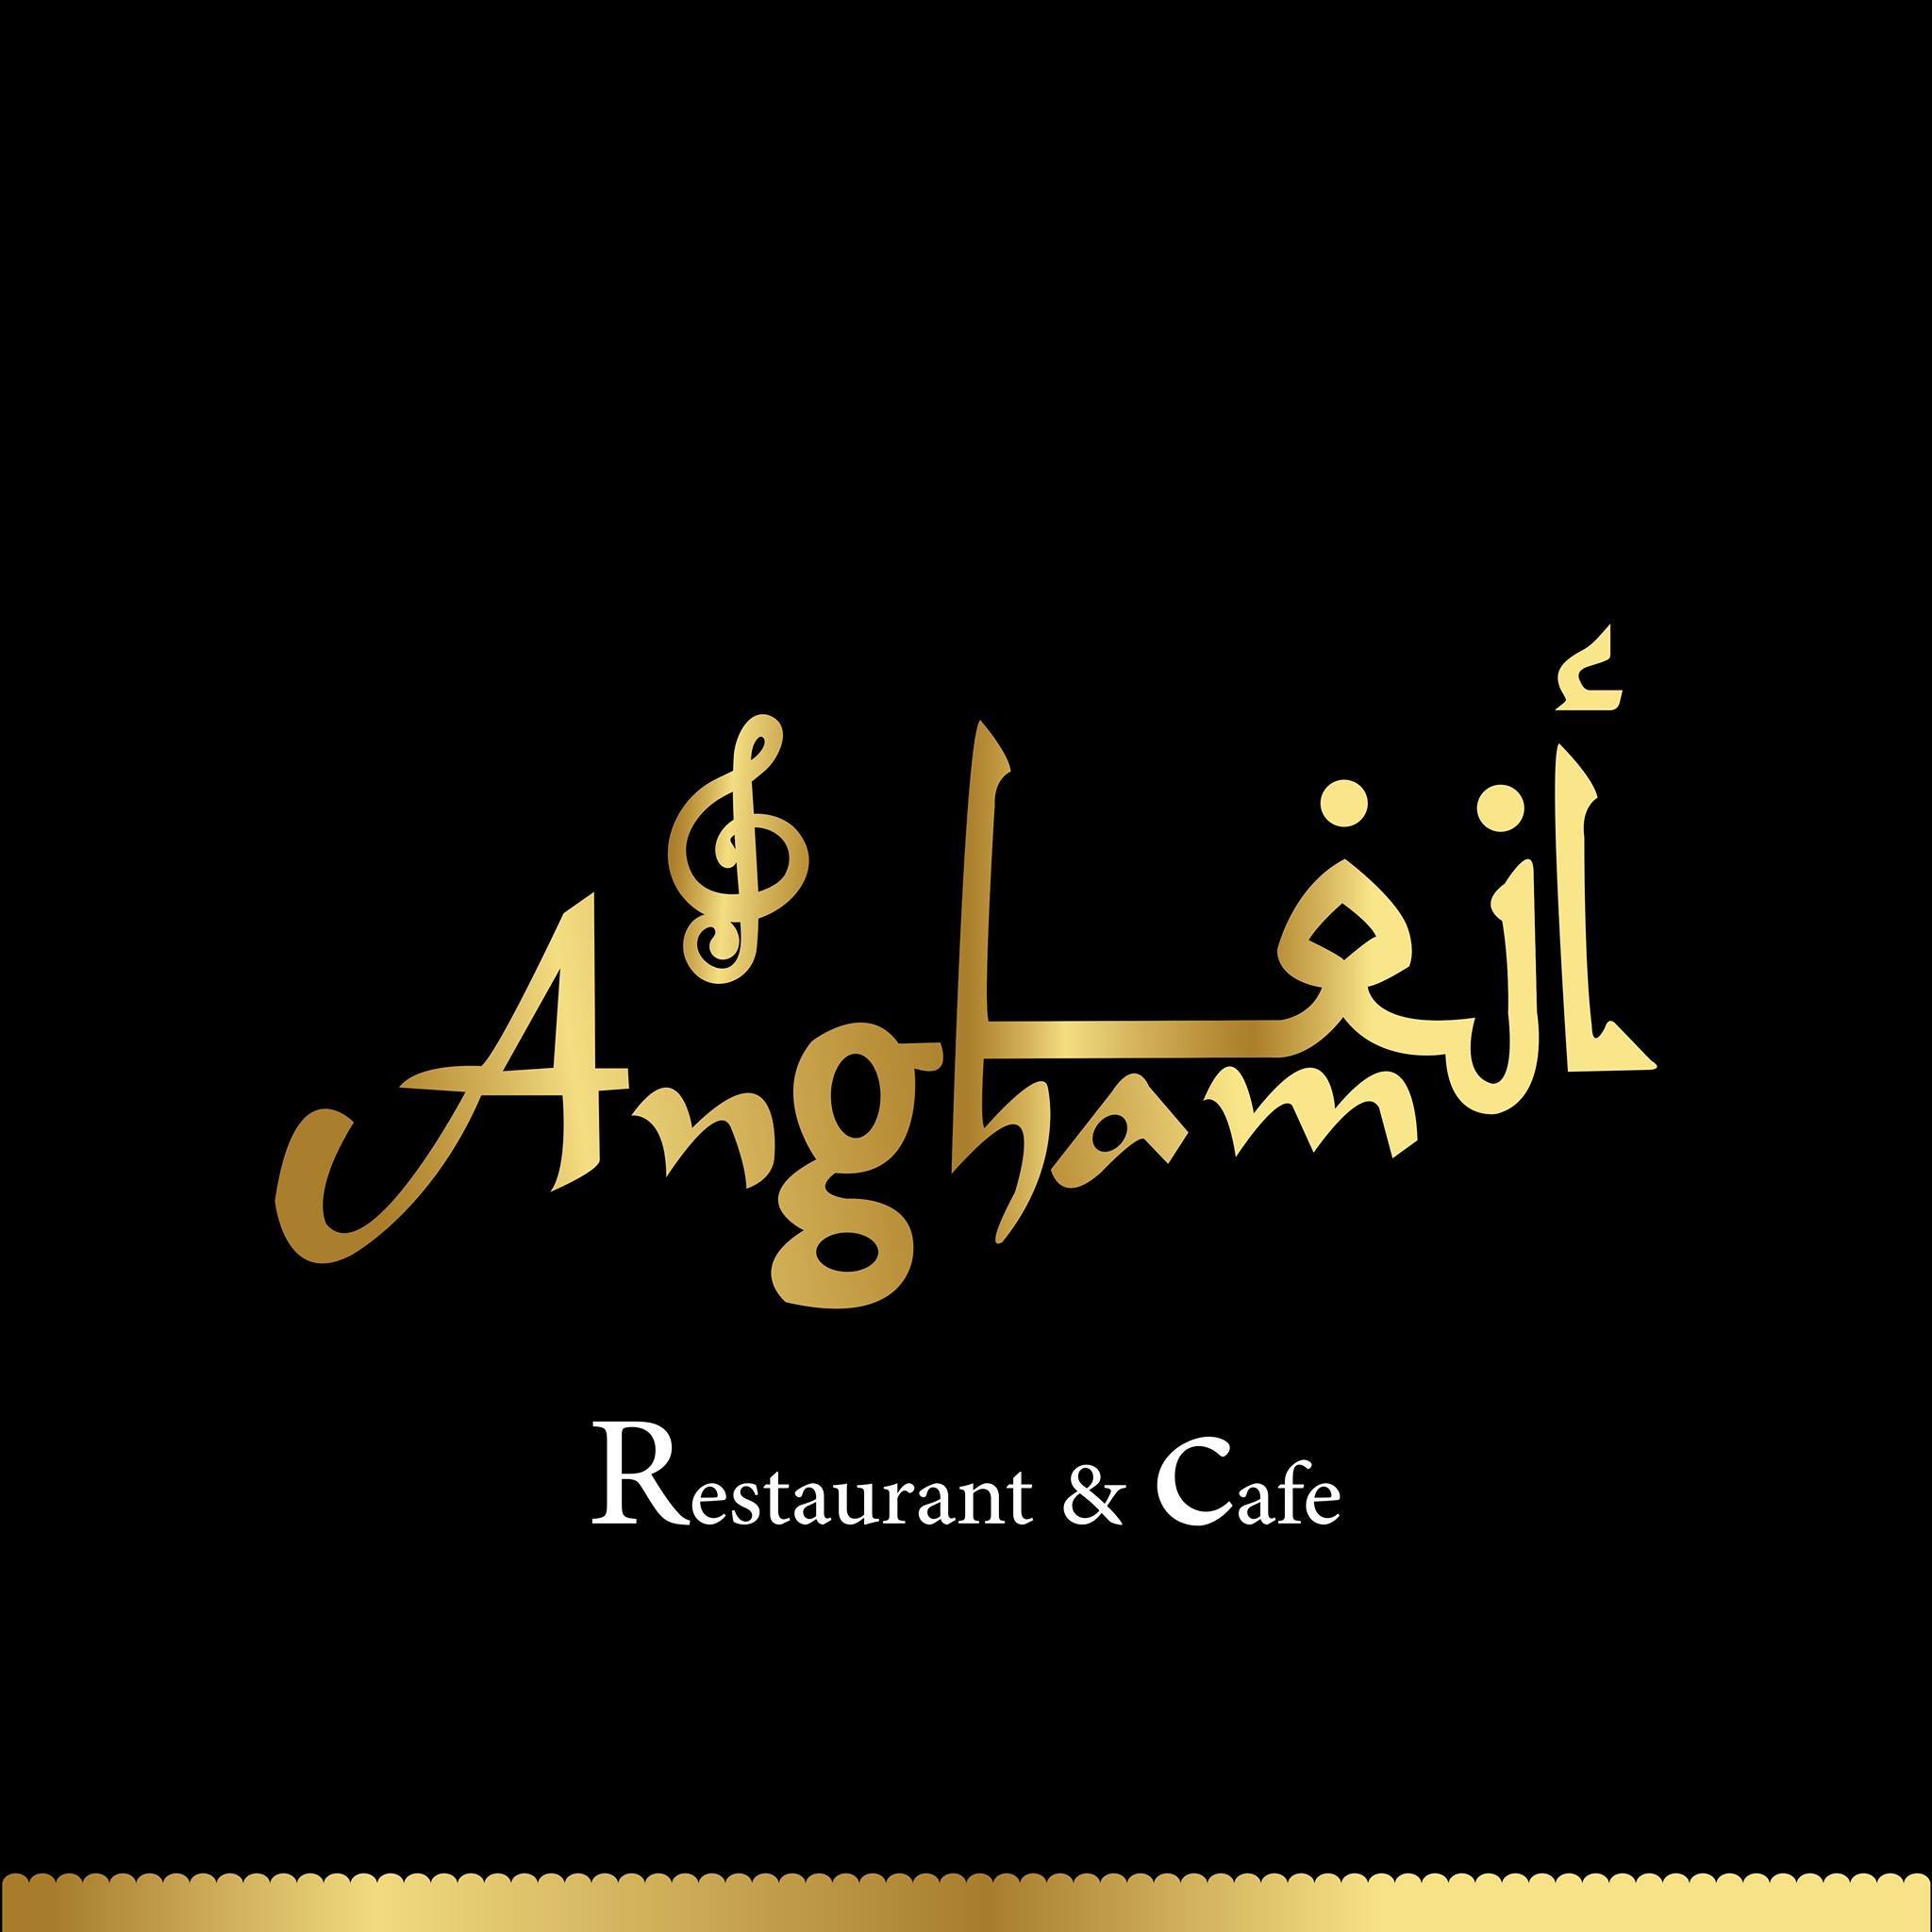 Angham Cafe